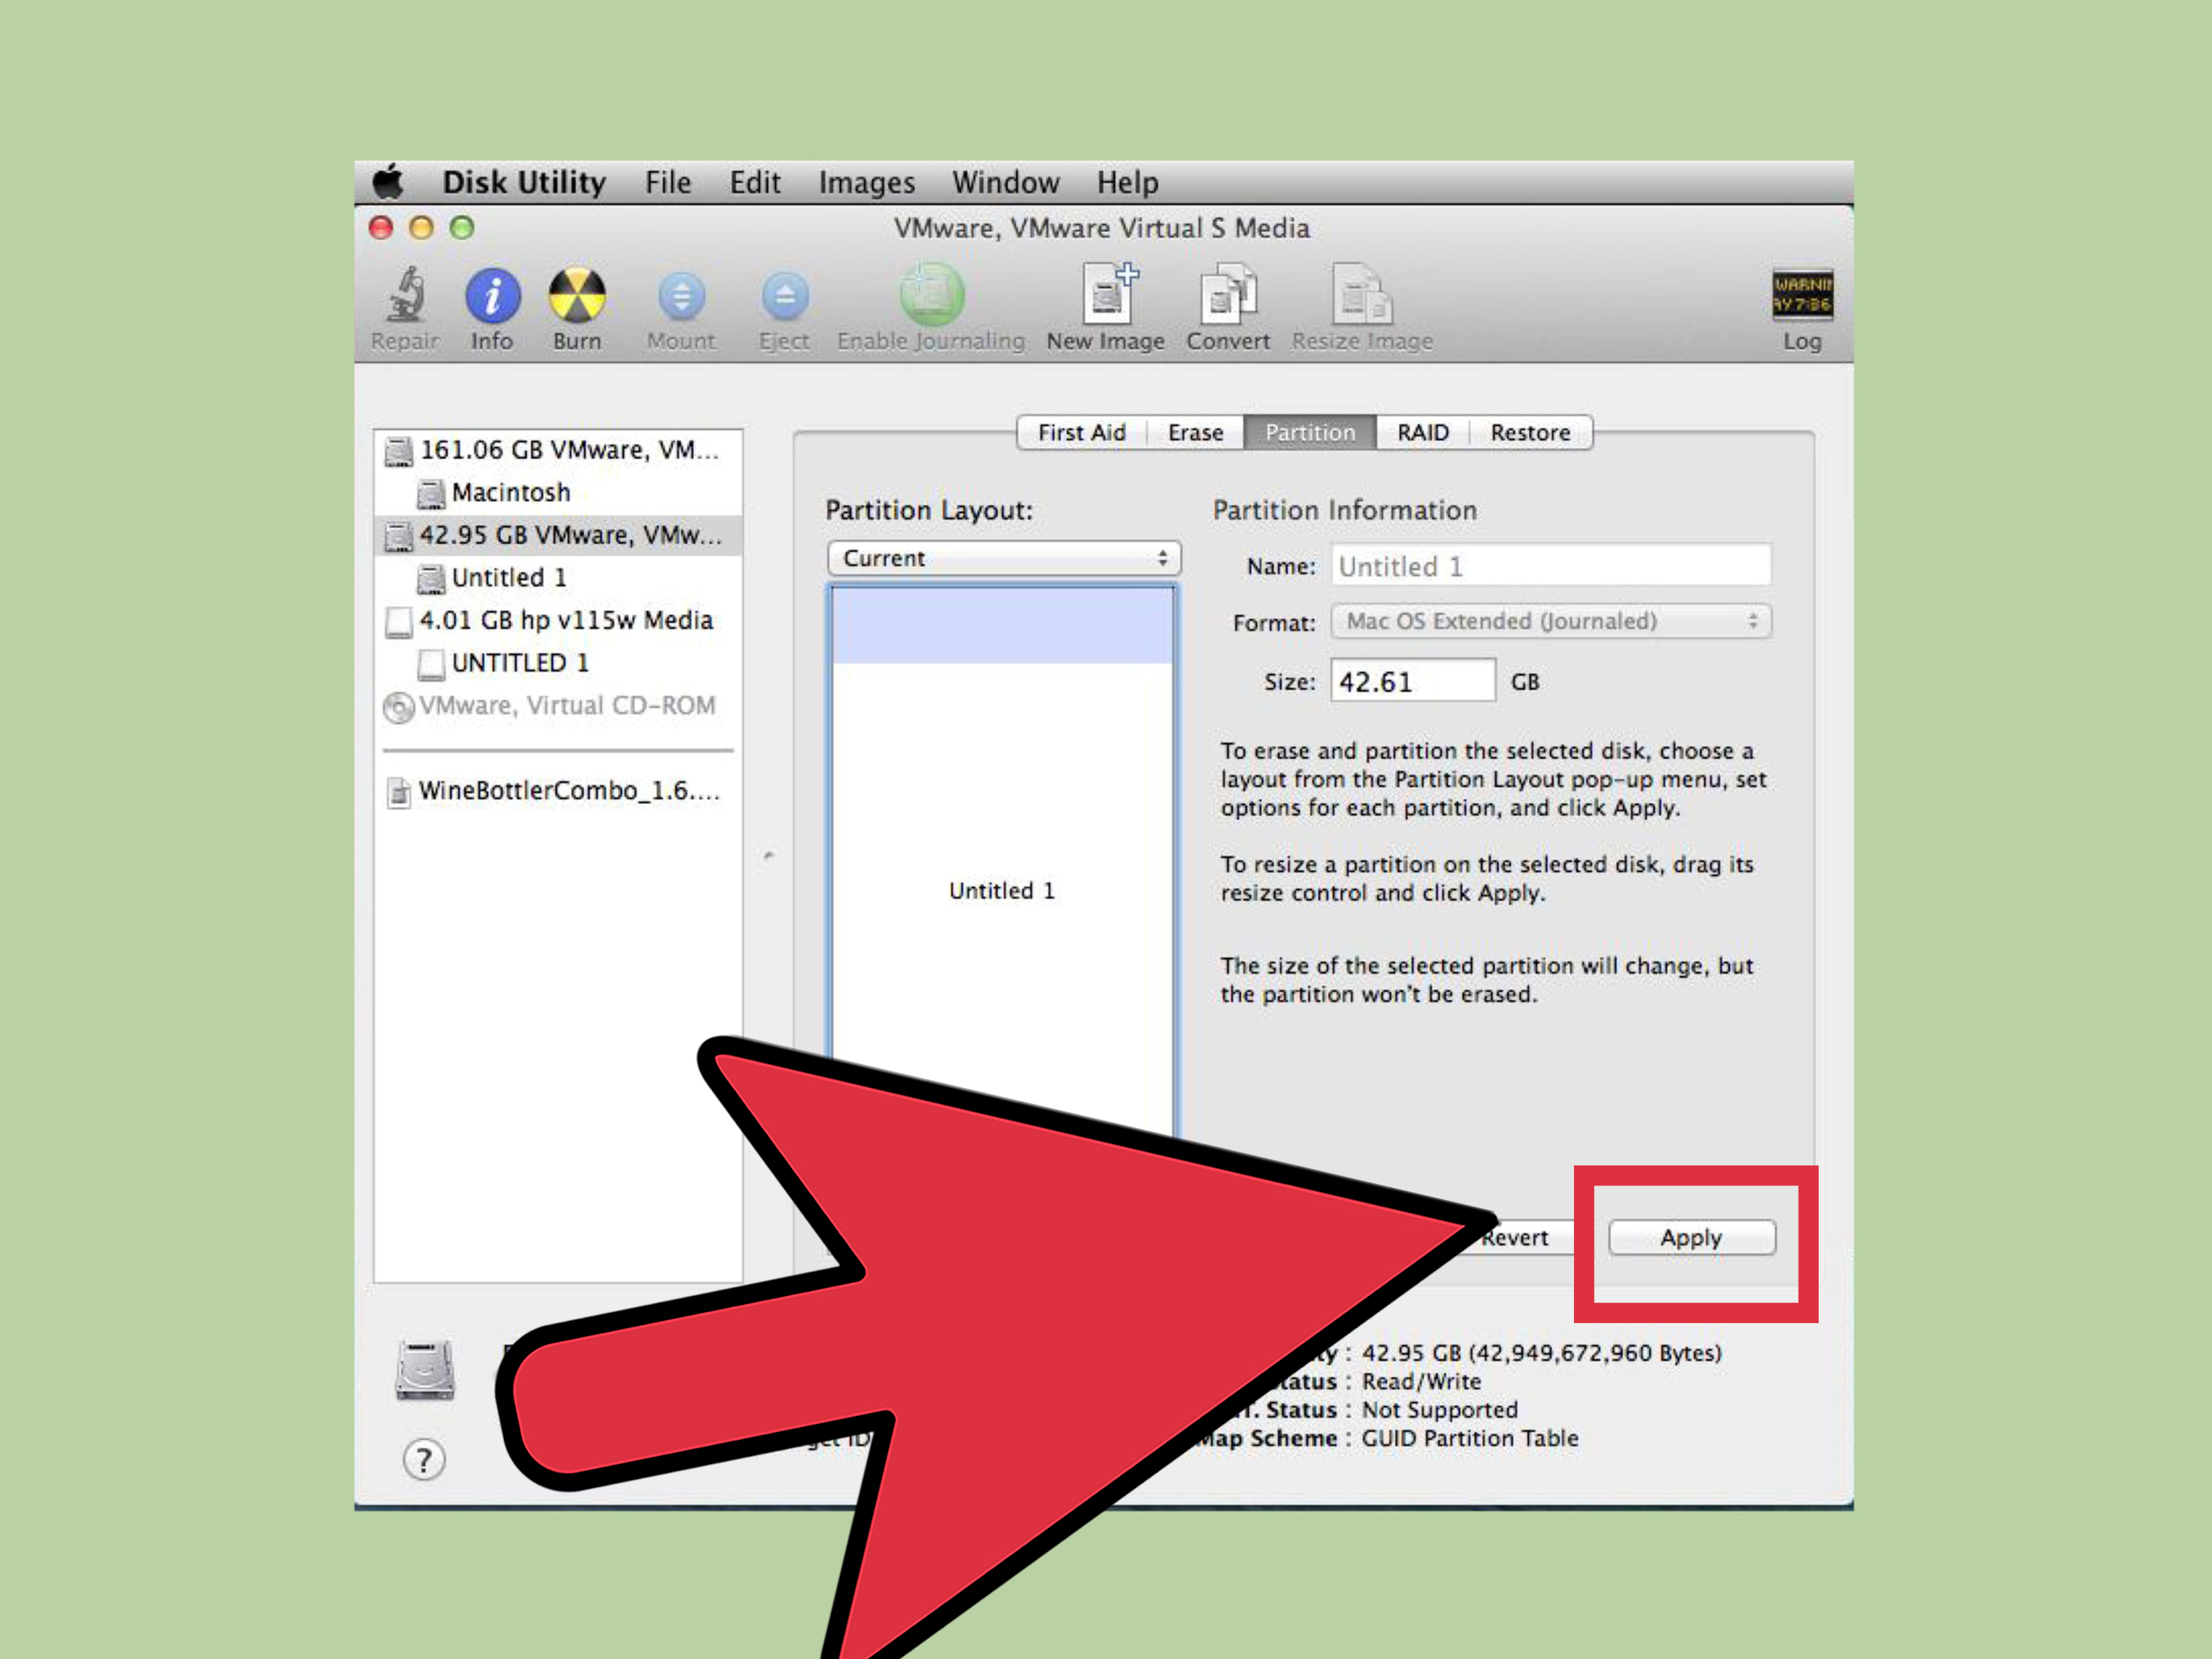 erasing hard drive for both mac and windows use